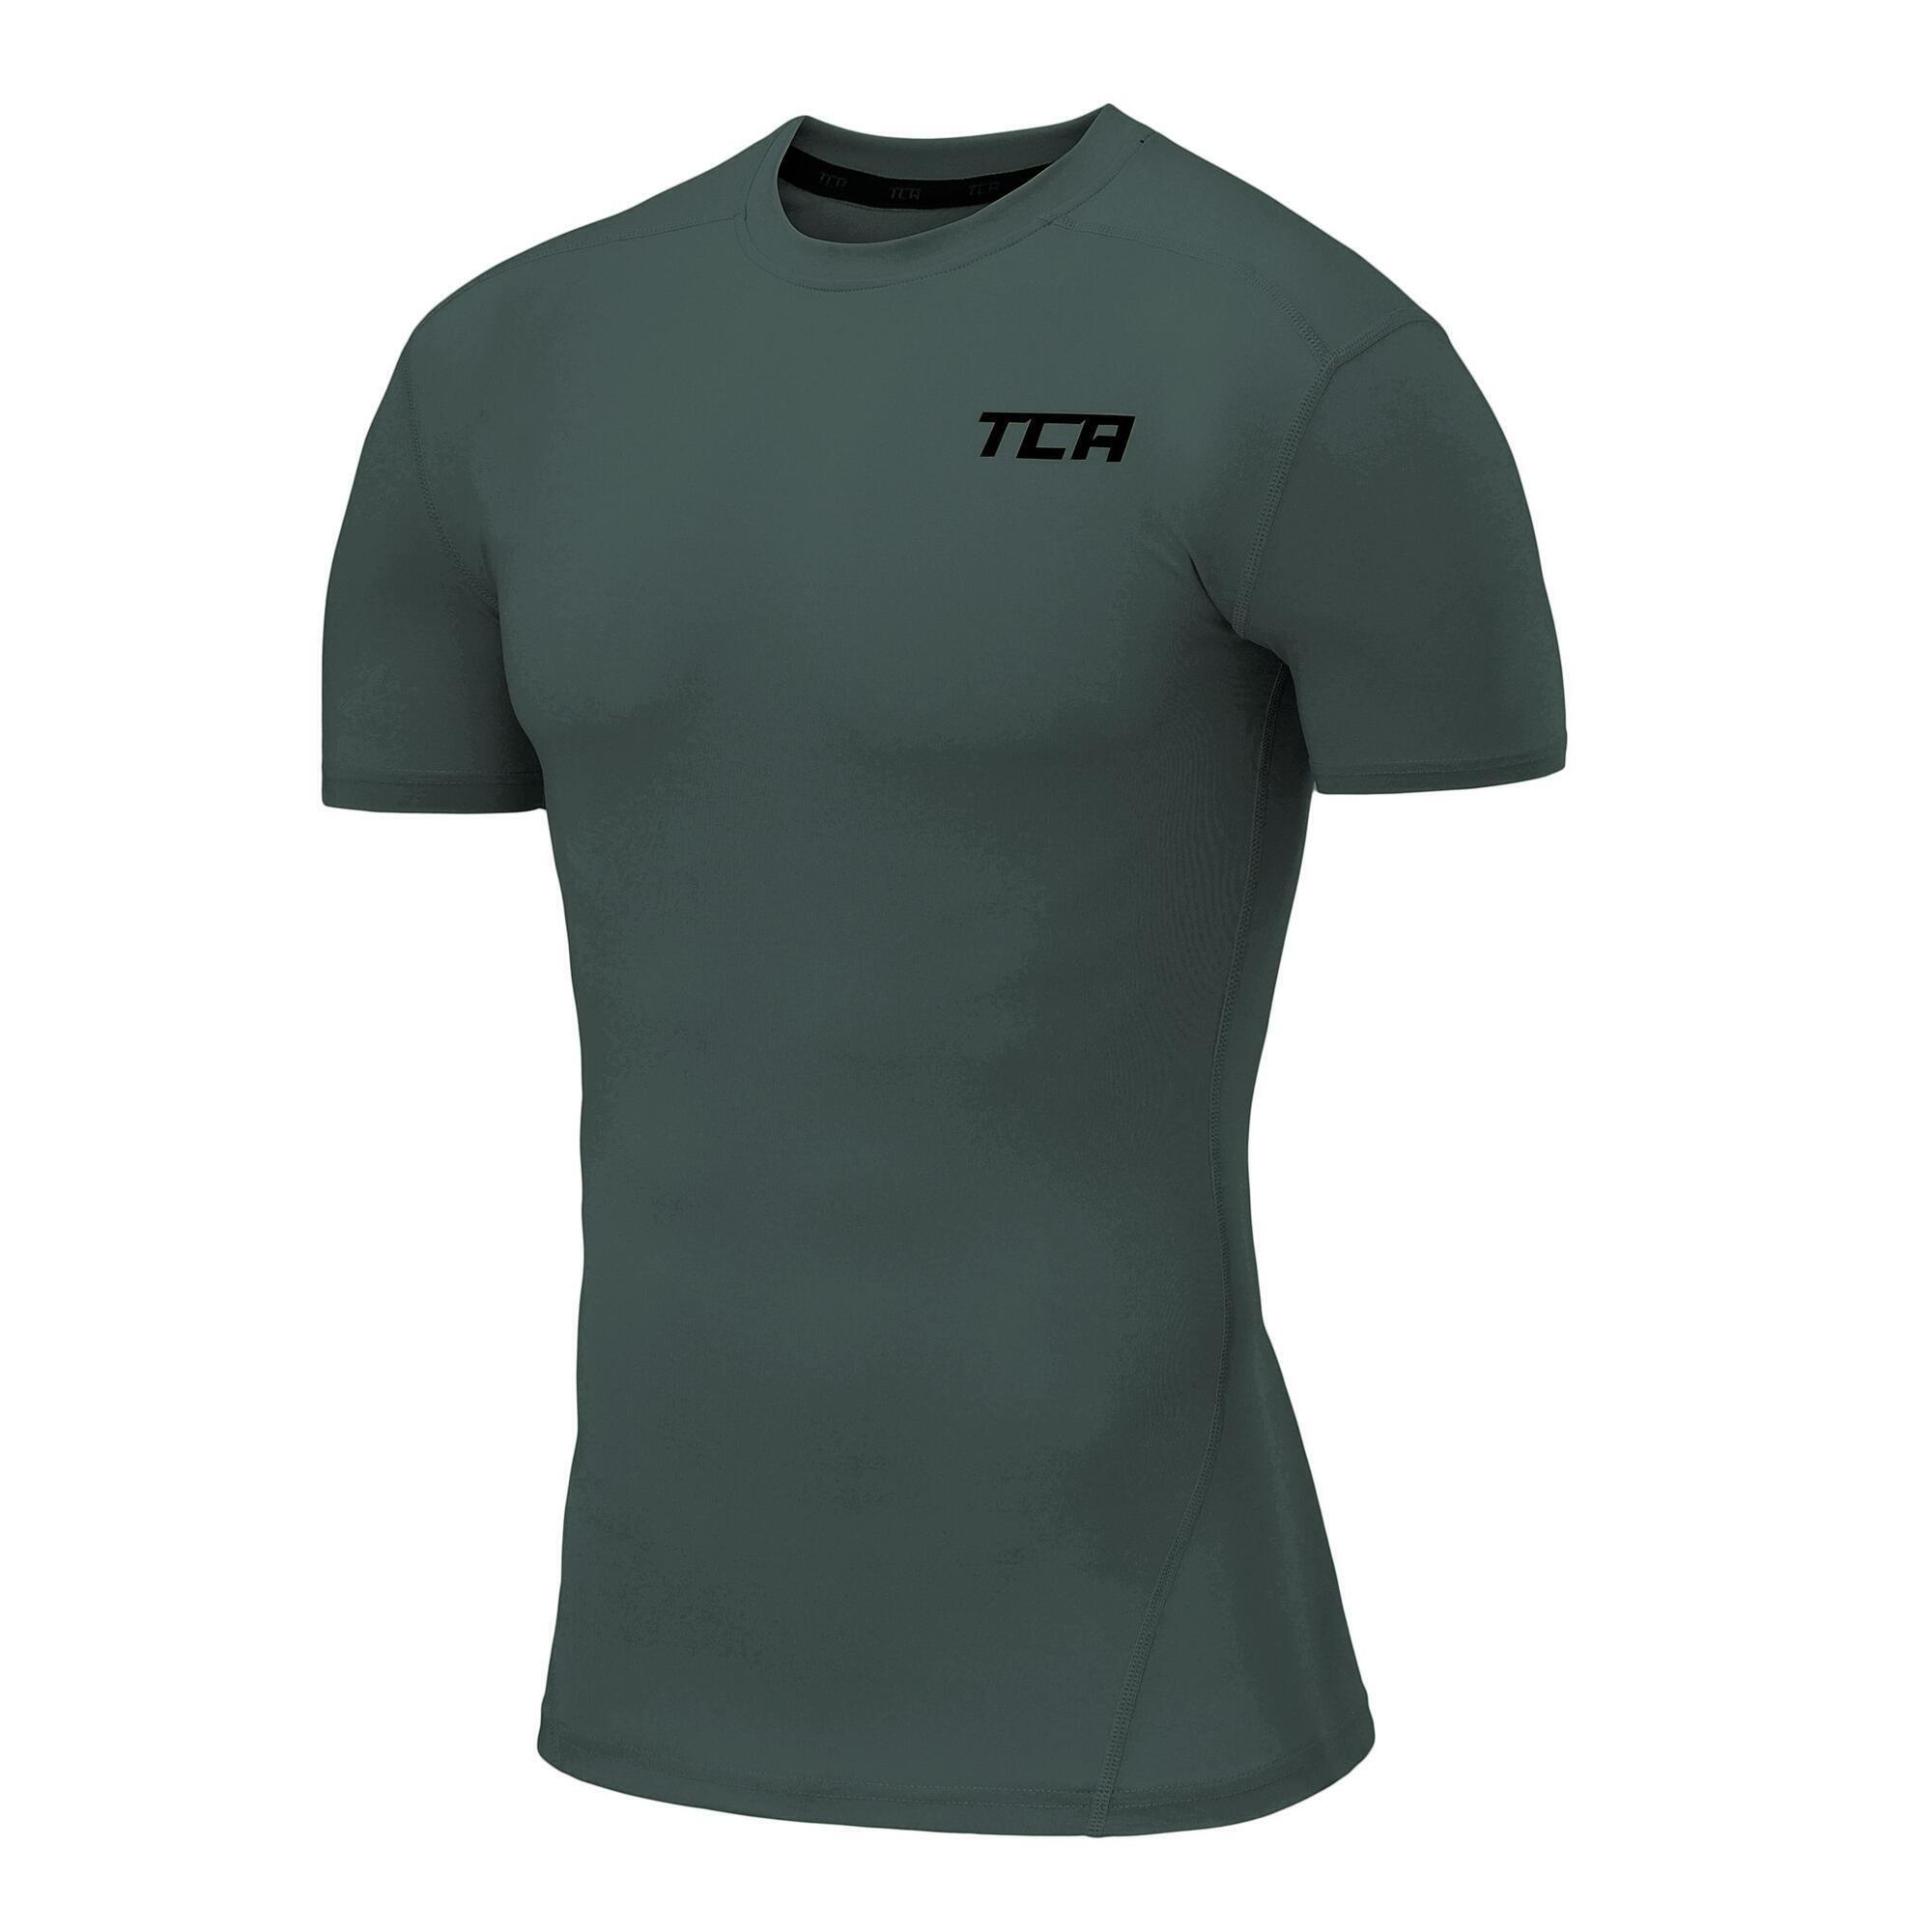 Men's Performance Base Layer Compression T-shirt - Darkest Spruce 1/4